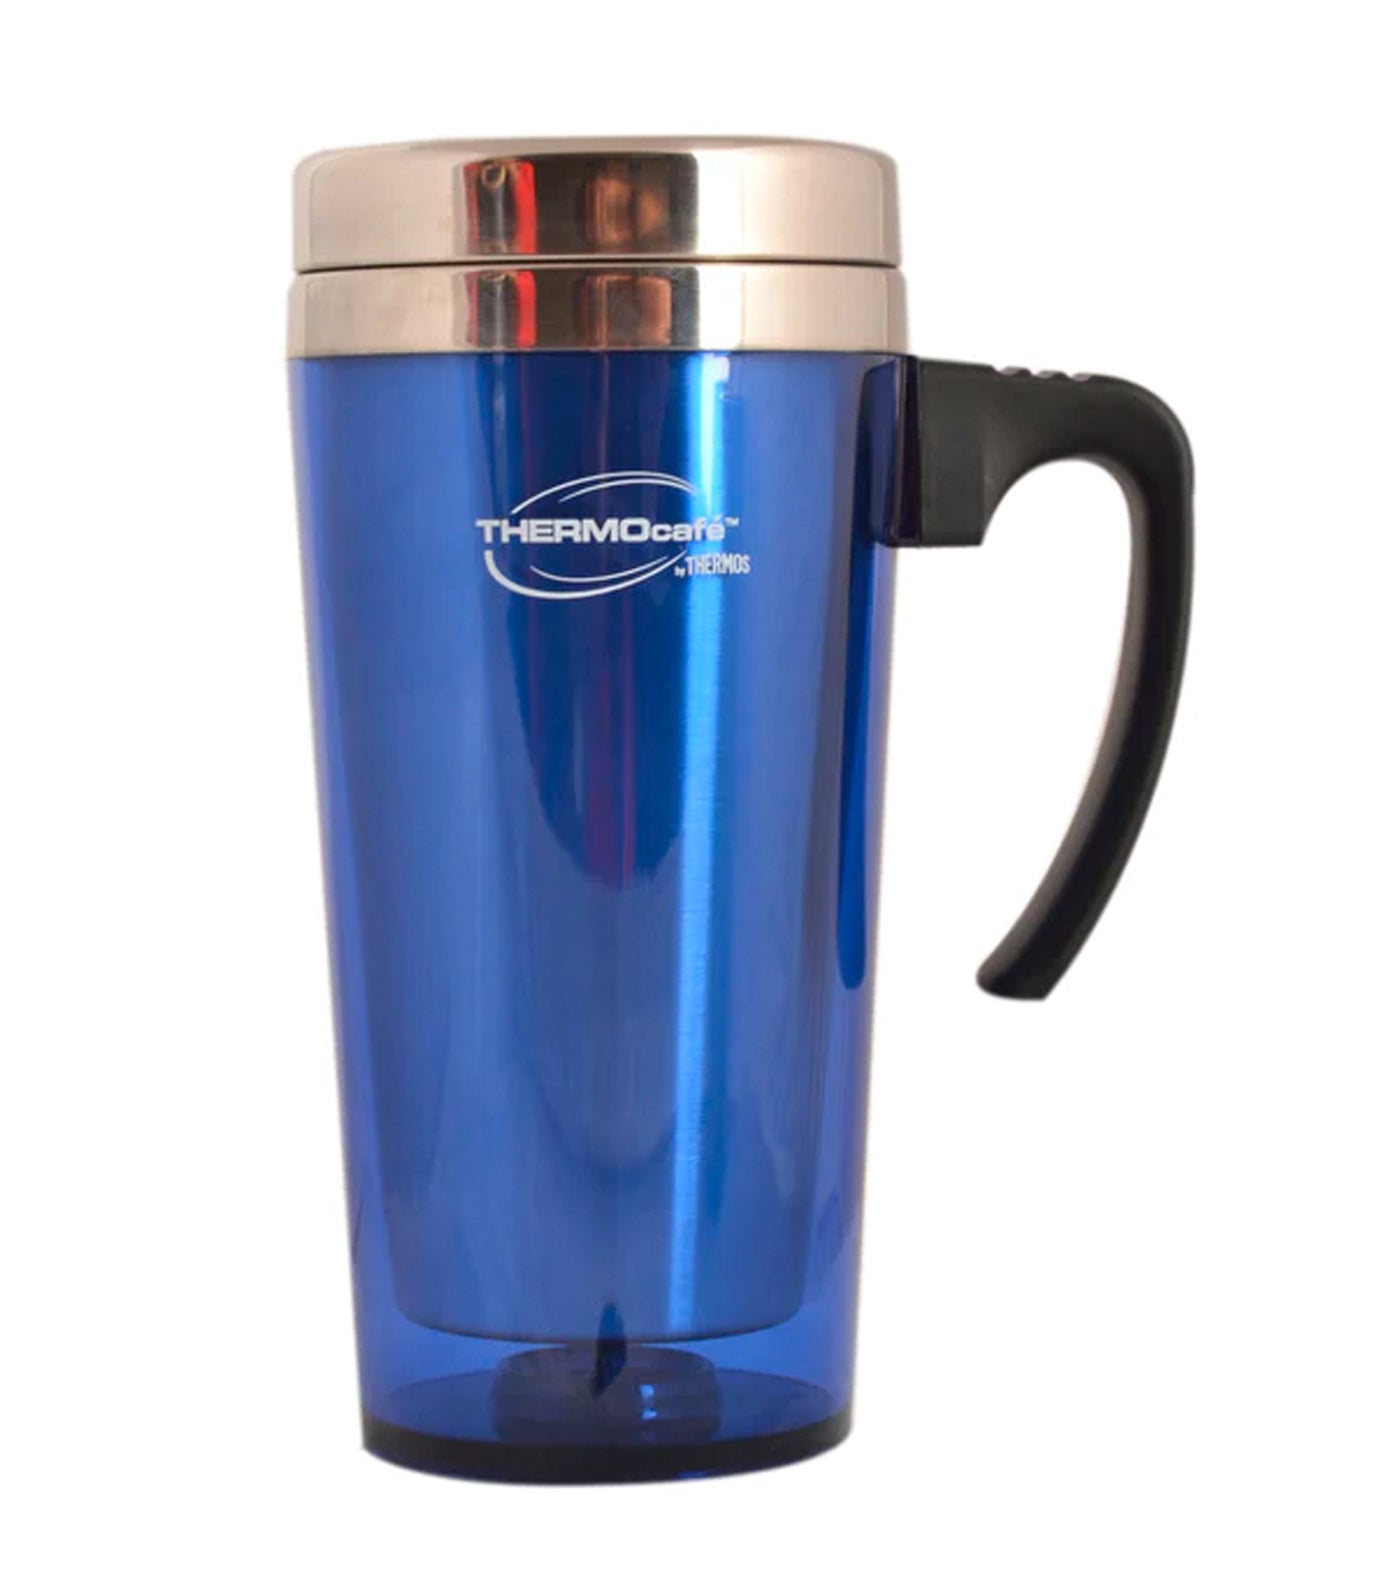  Thermos 187075 ThermoCafé Translucent Desk Mug, Midnight Blue,  450 ml : Home & Kitchen